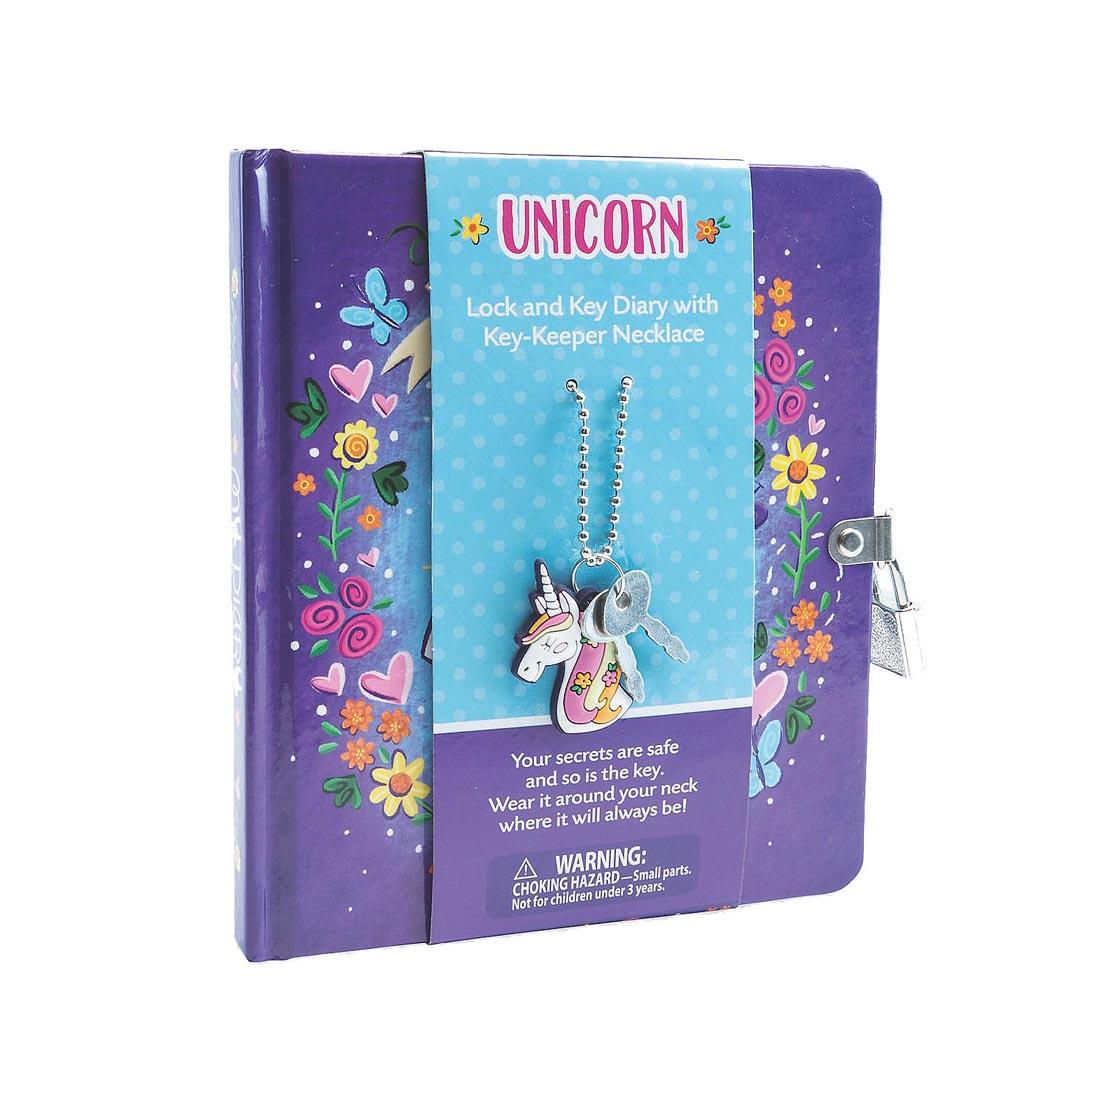 Unicorn Lock & Key Diary by Peaceable Kingdom